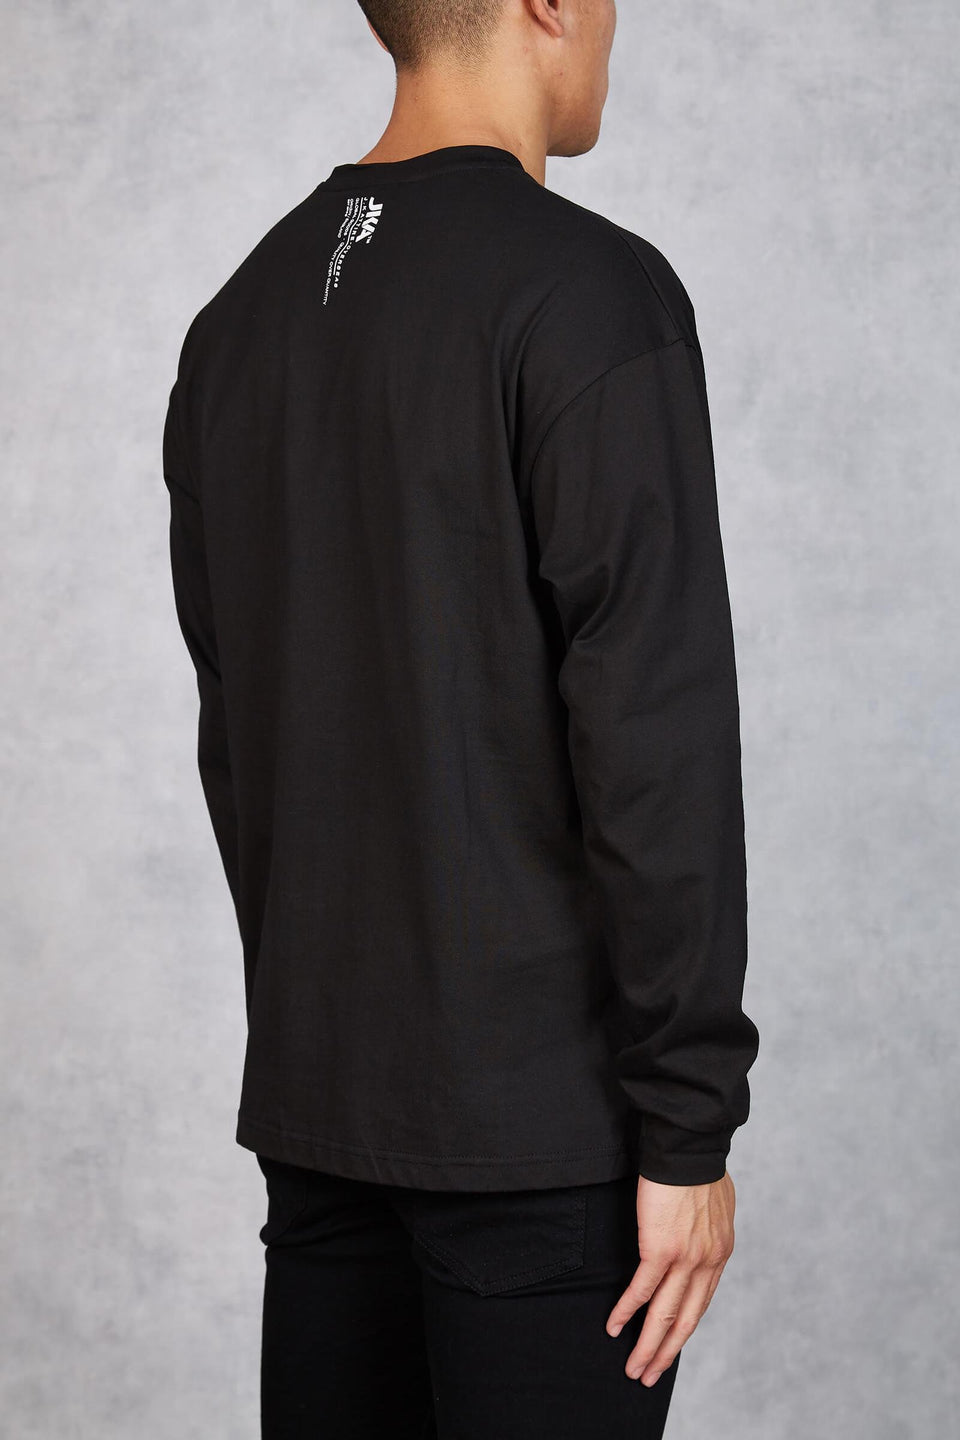 JKA British Lightweight Sweatshirt - Black